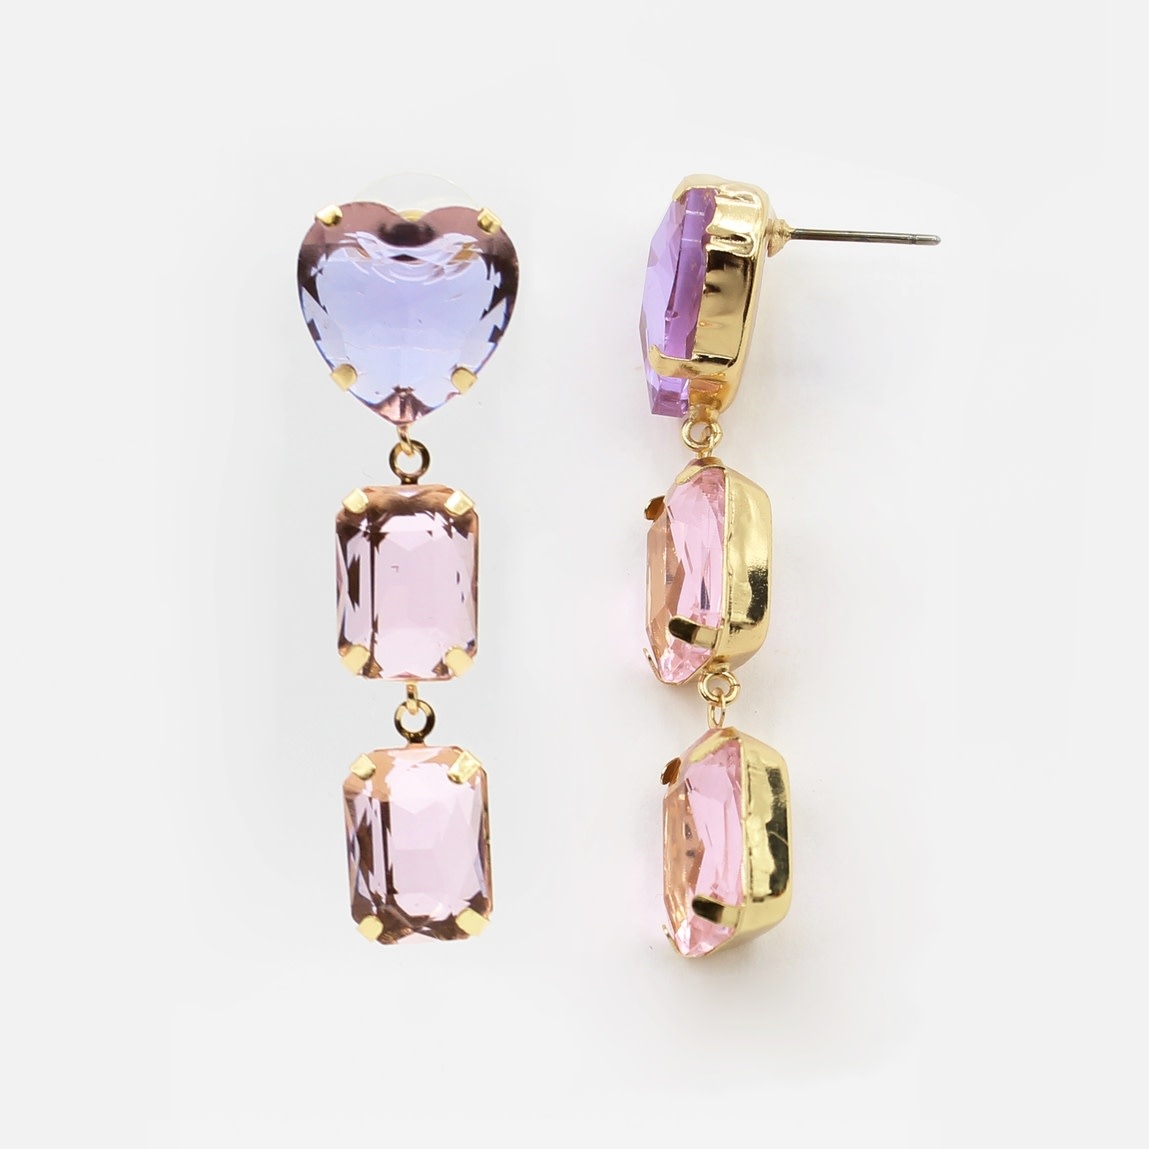 Lou & Co. Lavender Three-Tier Gemstone Earrings